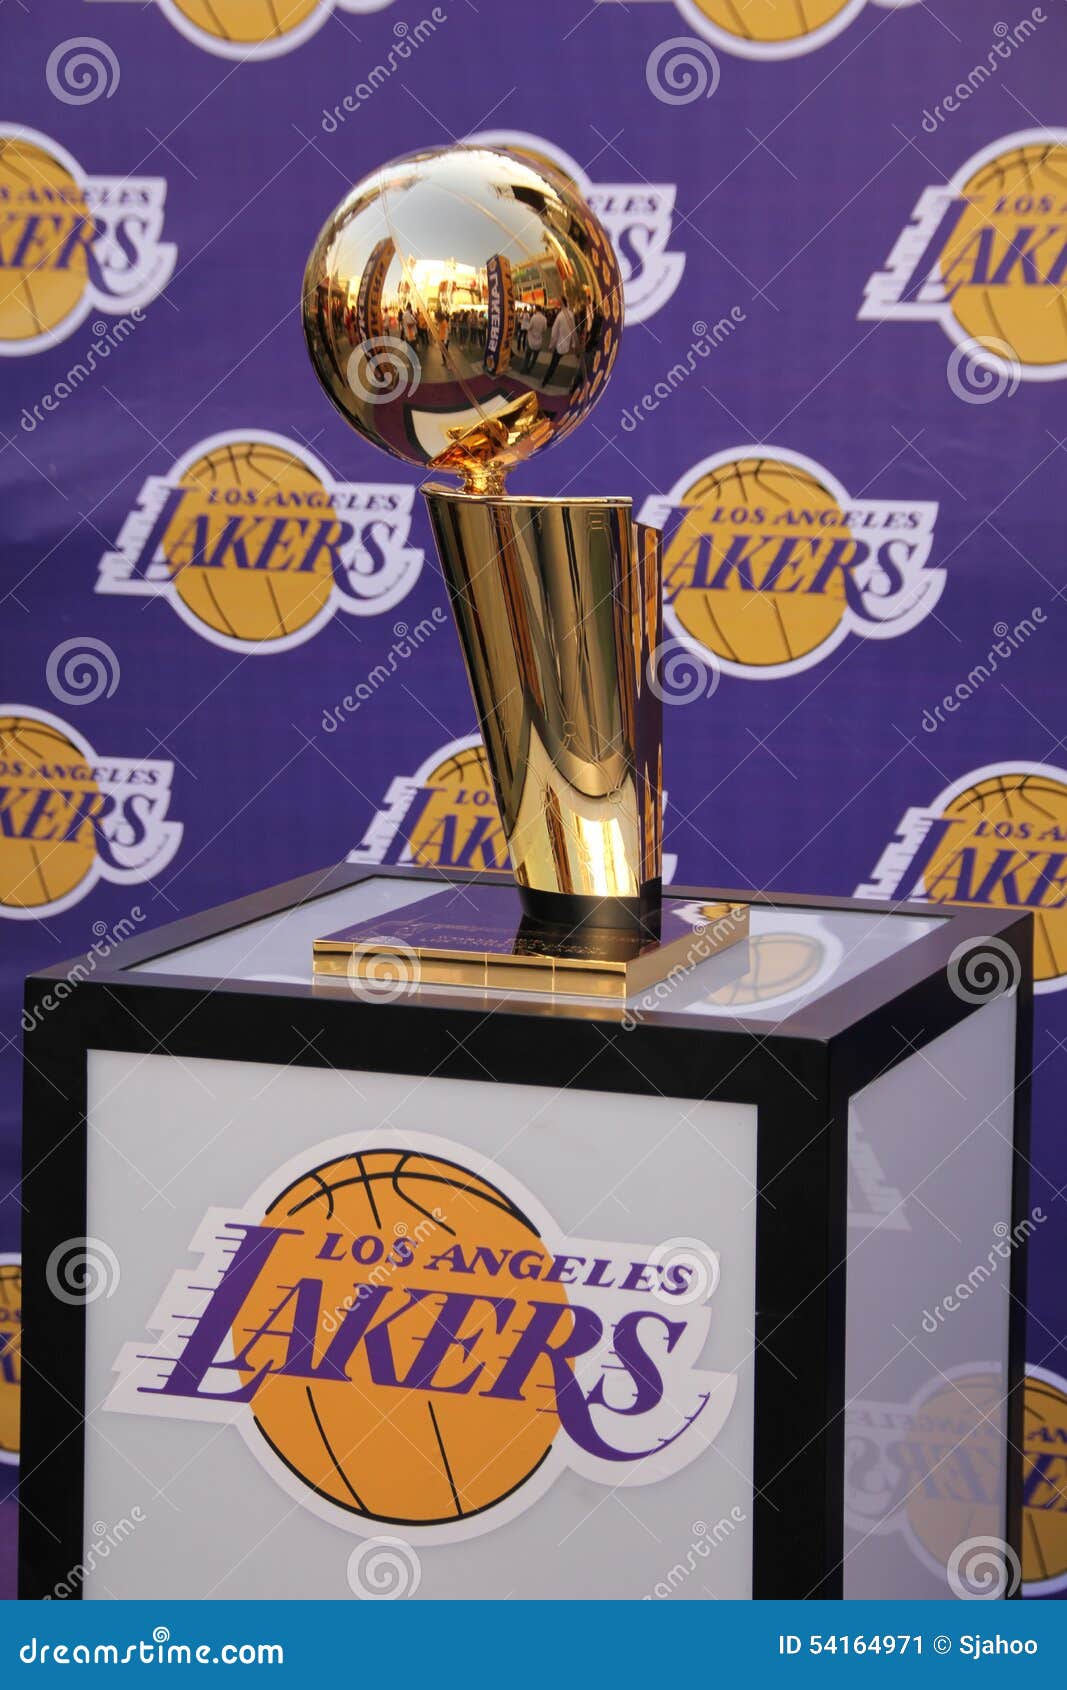 NBA Championship Trophy  Nba championships, Team wallpaper, Trophy